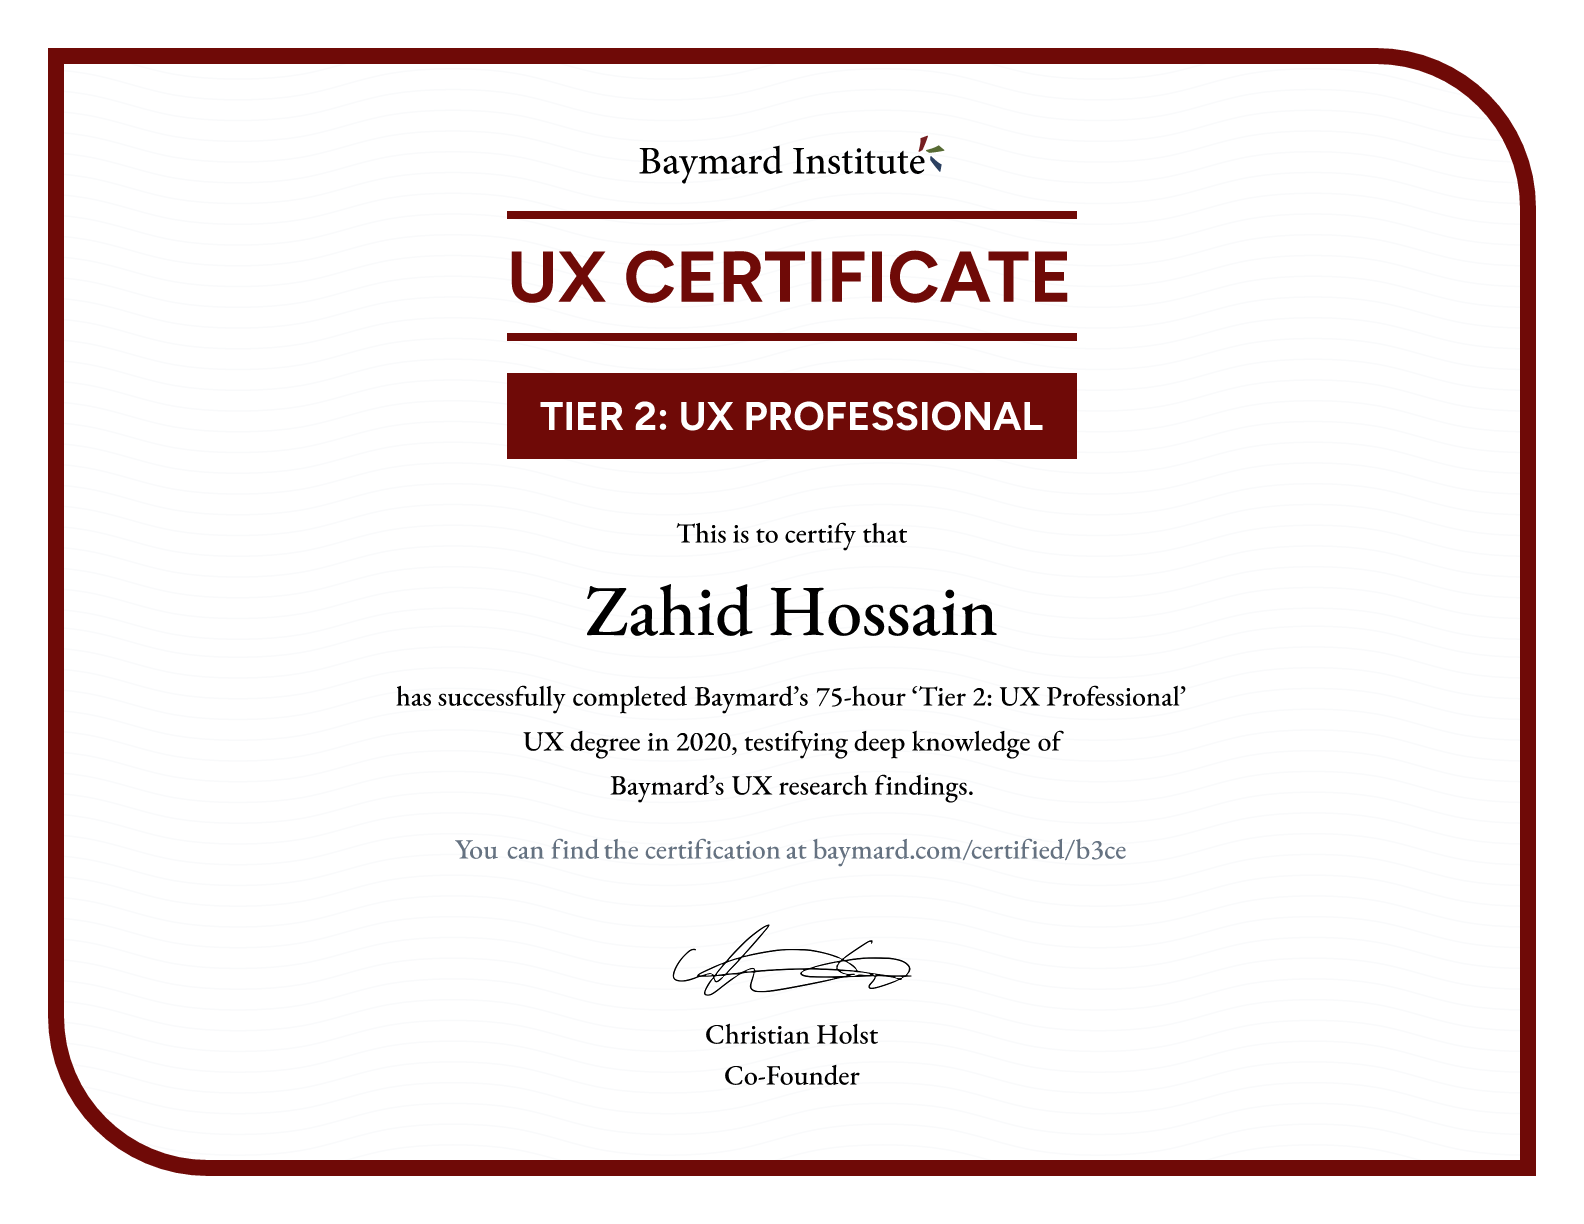 Zahid Hossain’s certificate